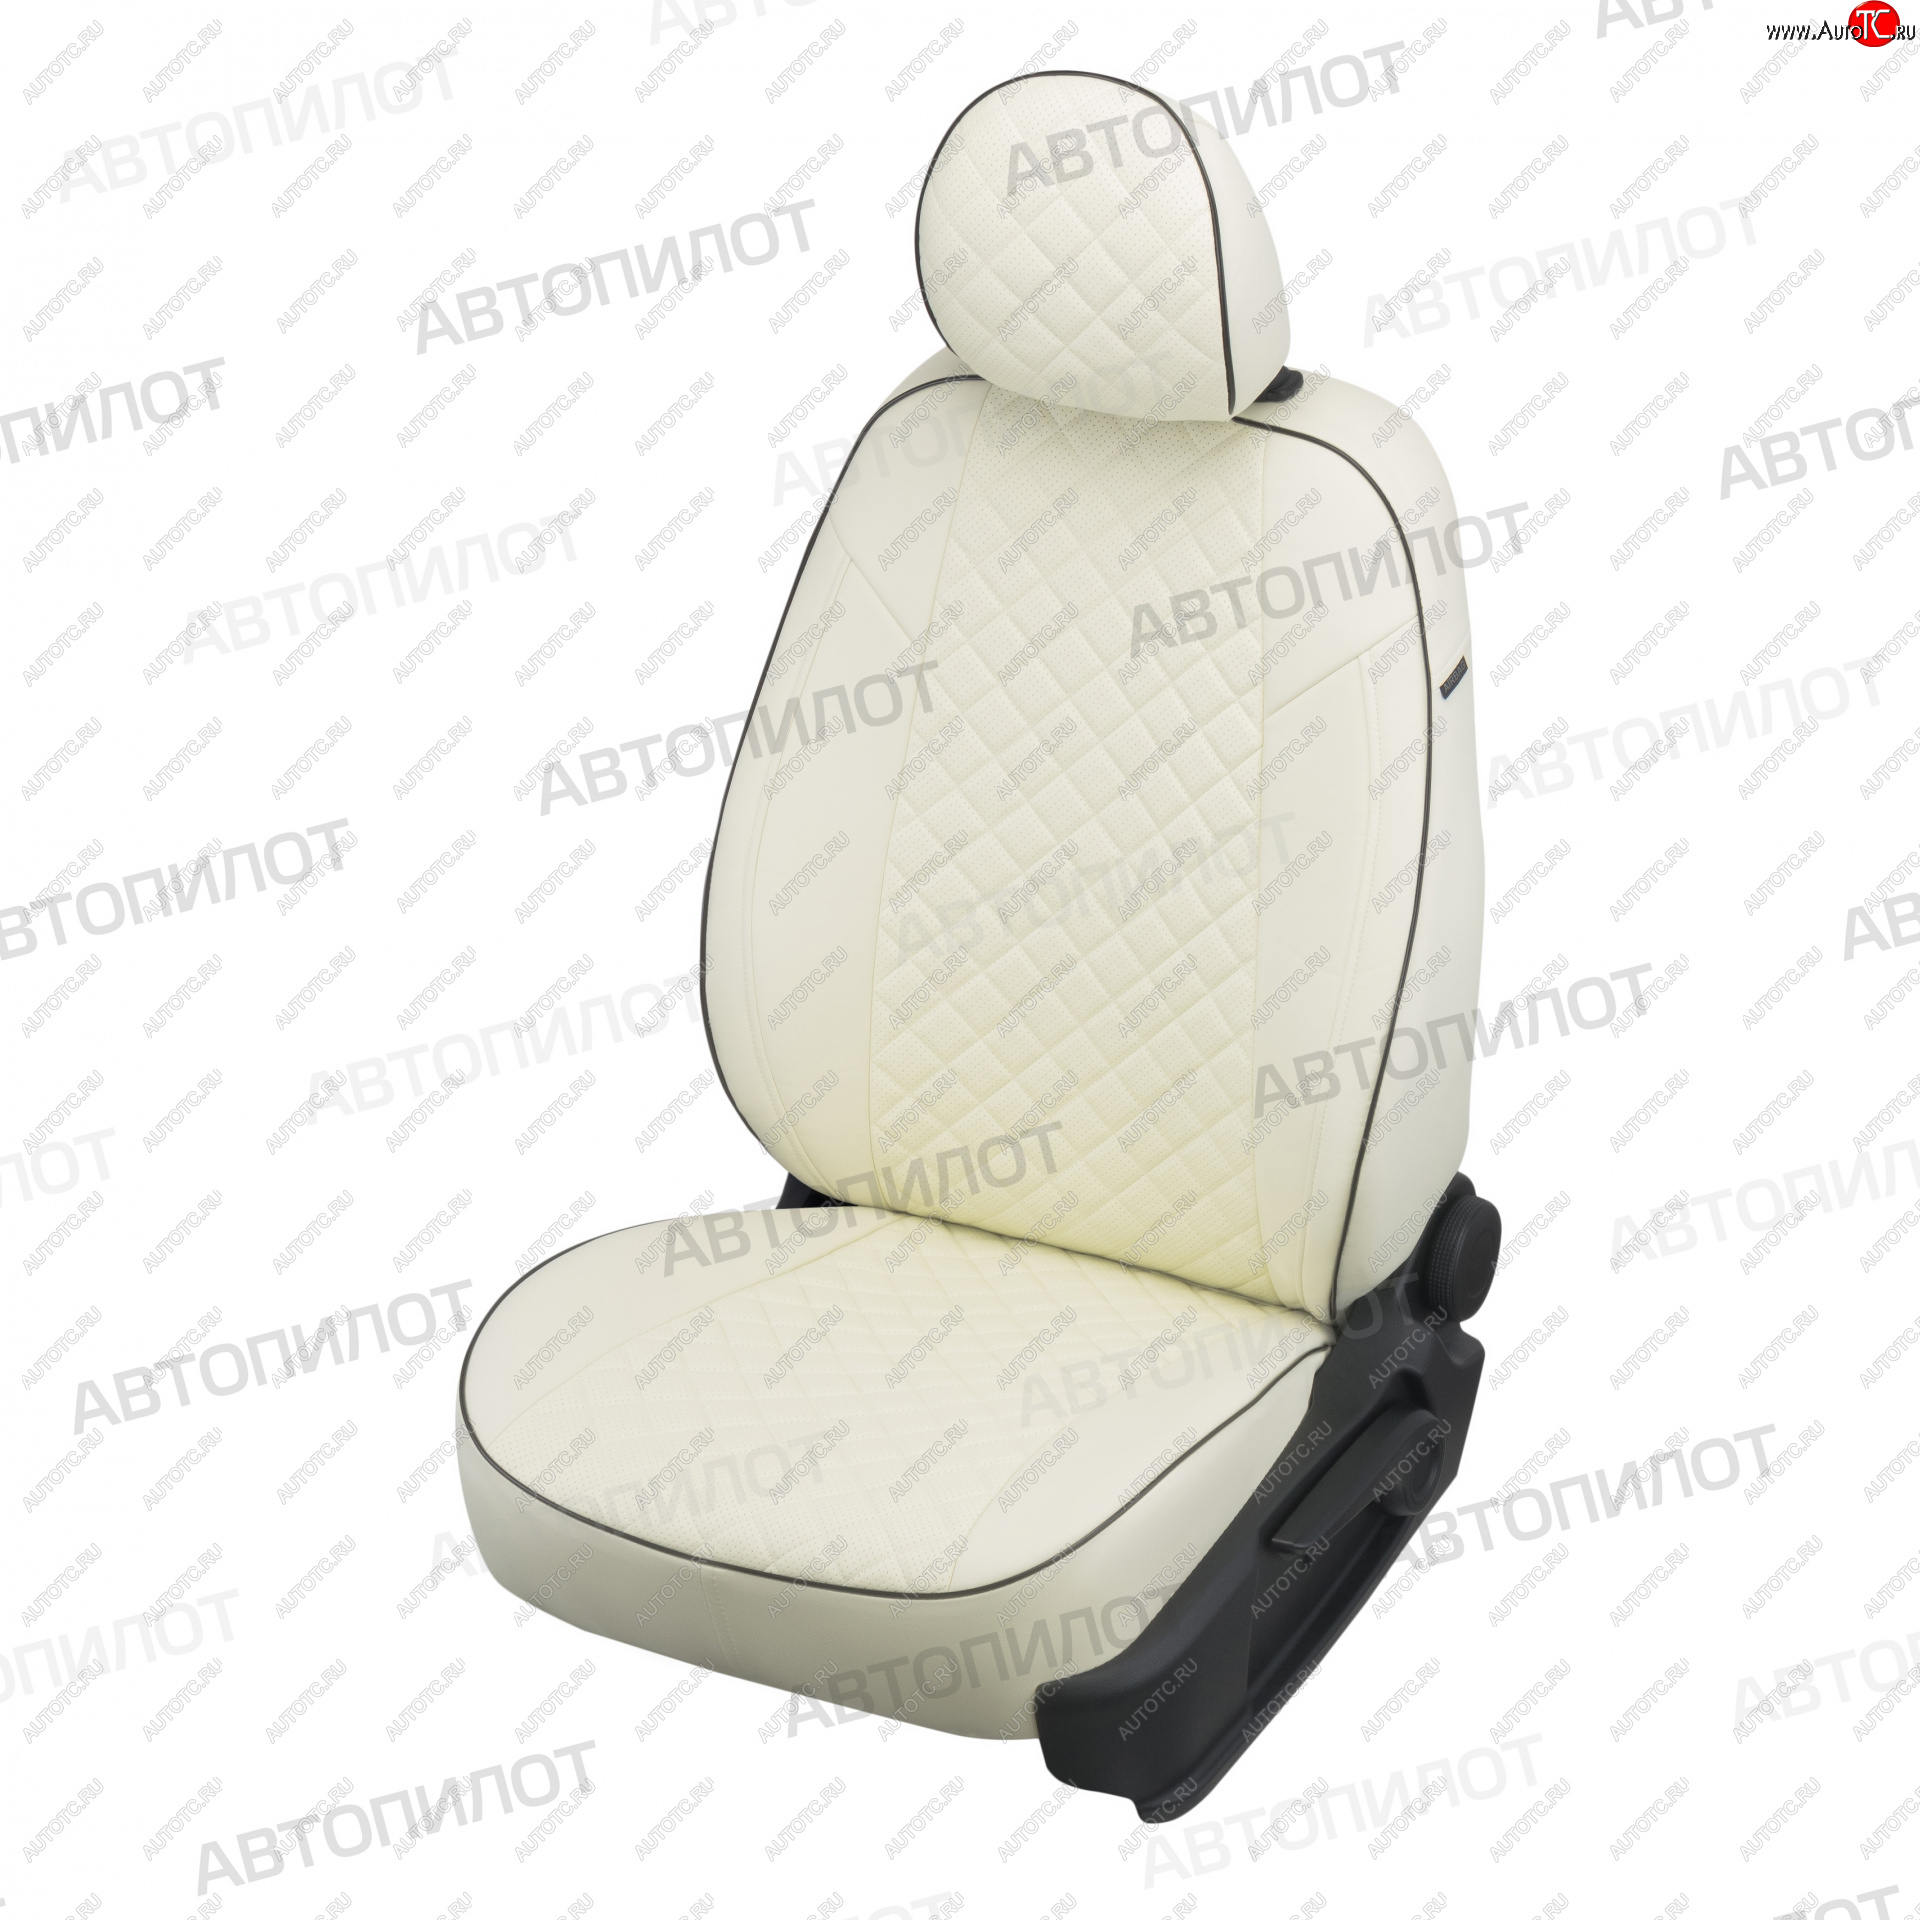 14 499 р. Чехлы сидений (Trend, экокожа) Автопилот Ромб  Ford Kuga  1 (2008-2013) (белый)